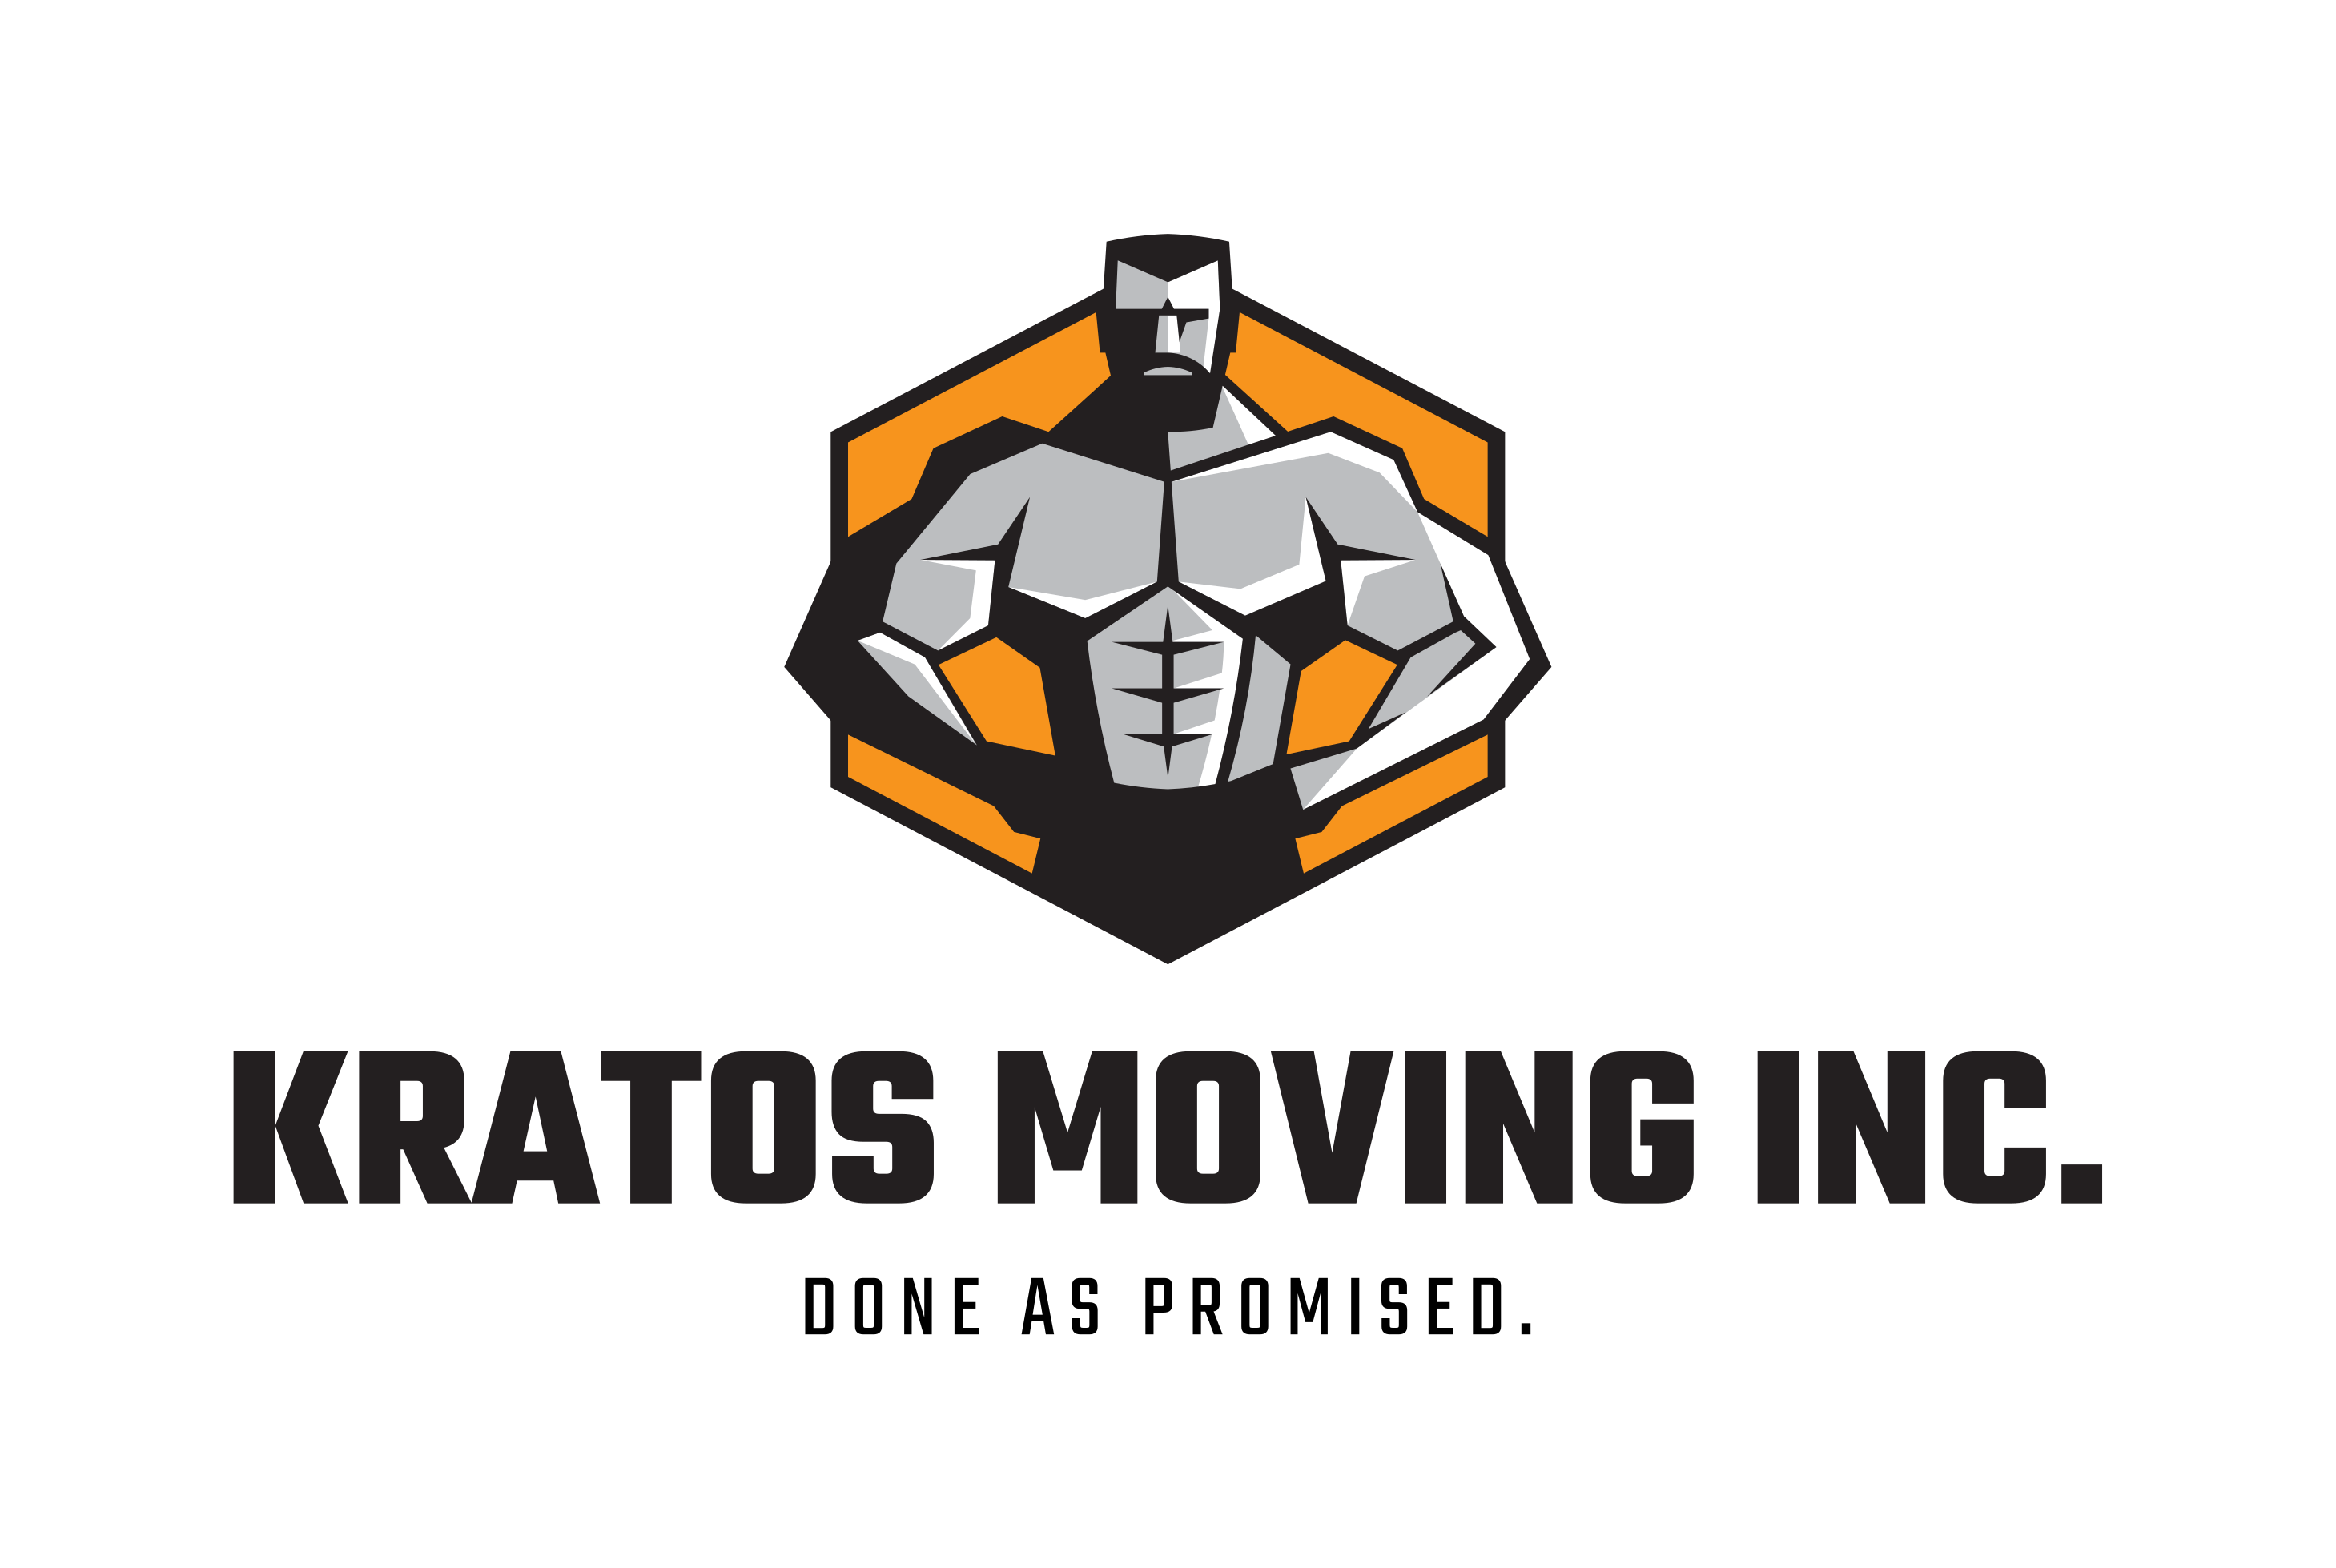 Kratos Moving Inc.